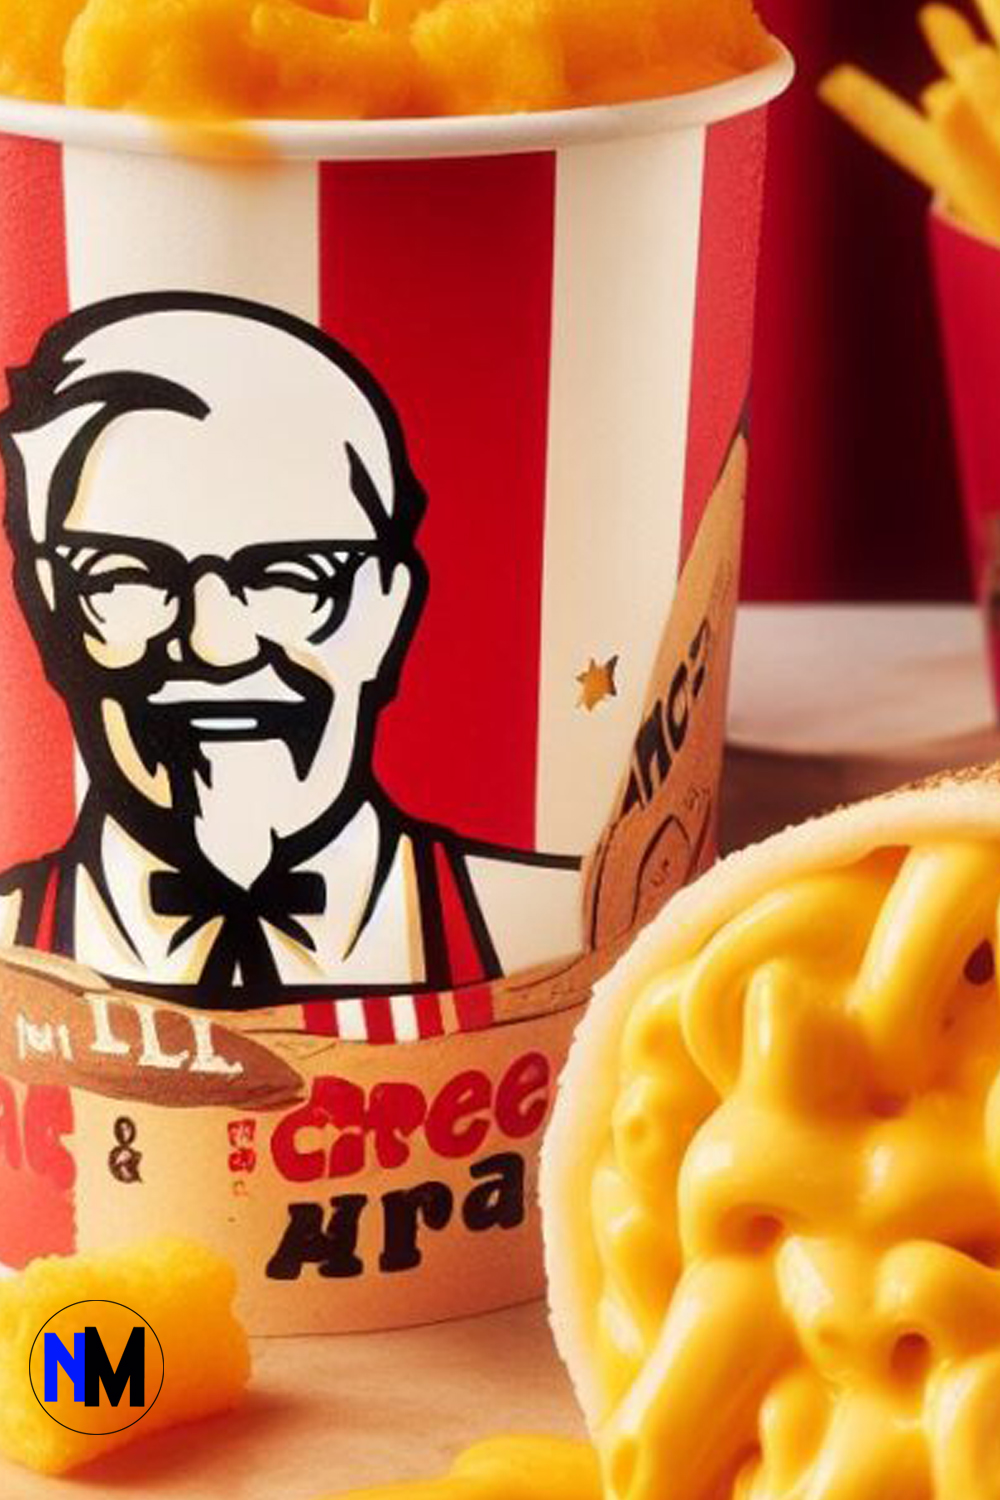 KFC debuts new Mac & Cheese Wrap